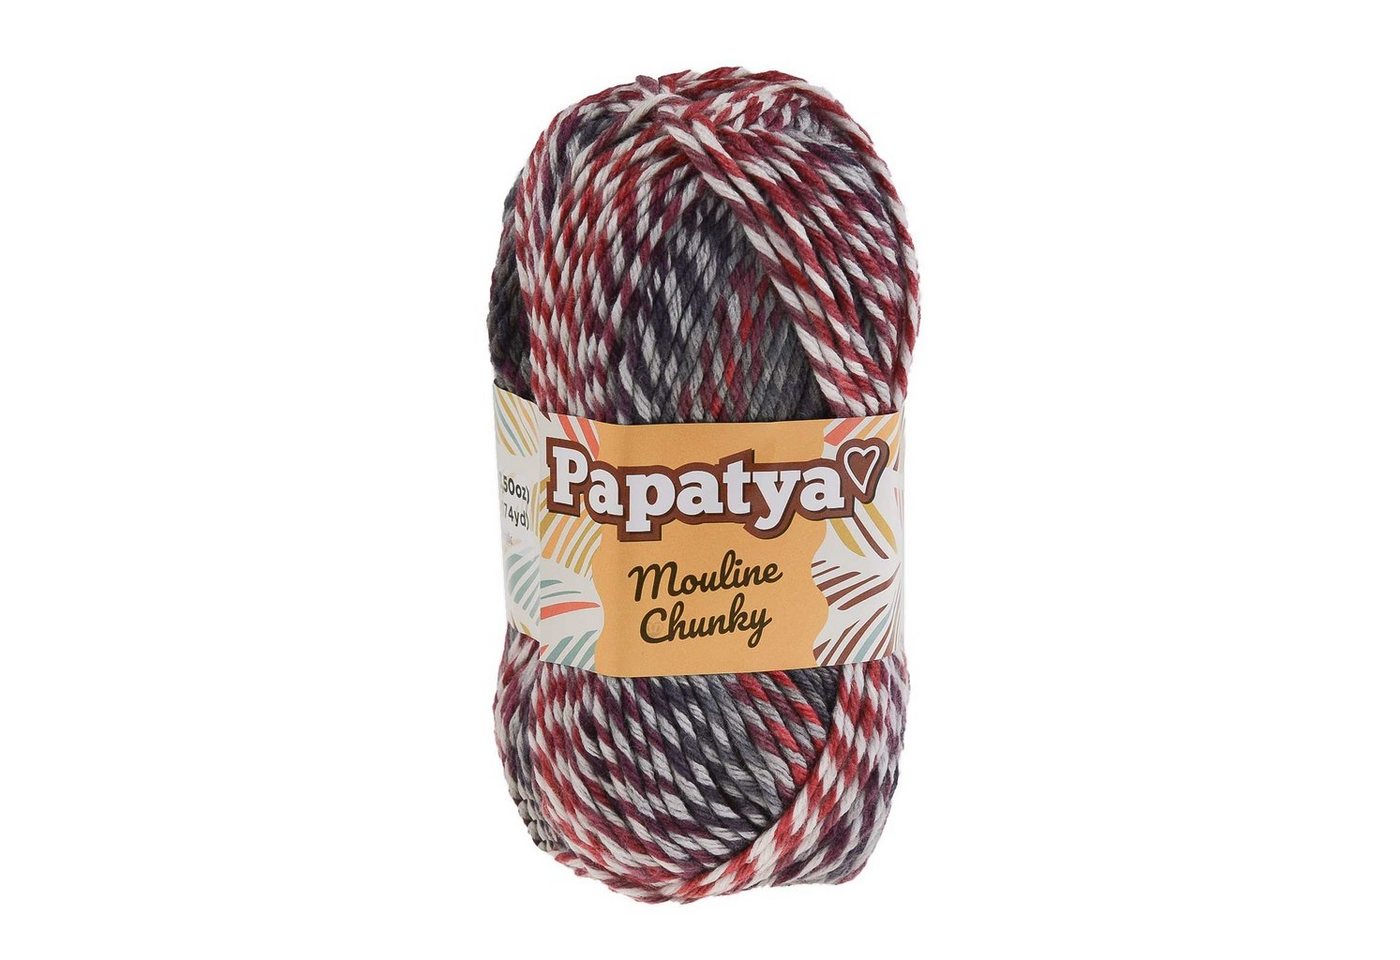 Papatya 100g Strickgarn Papatya Mouline Chunky Strickwolle mehrfarbig Effektgarn, 160 m, 4201 mehrfarbig von Papatya